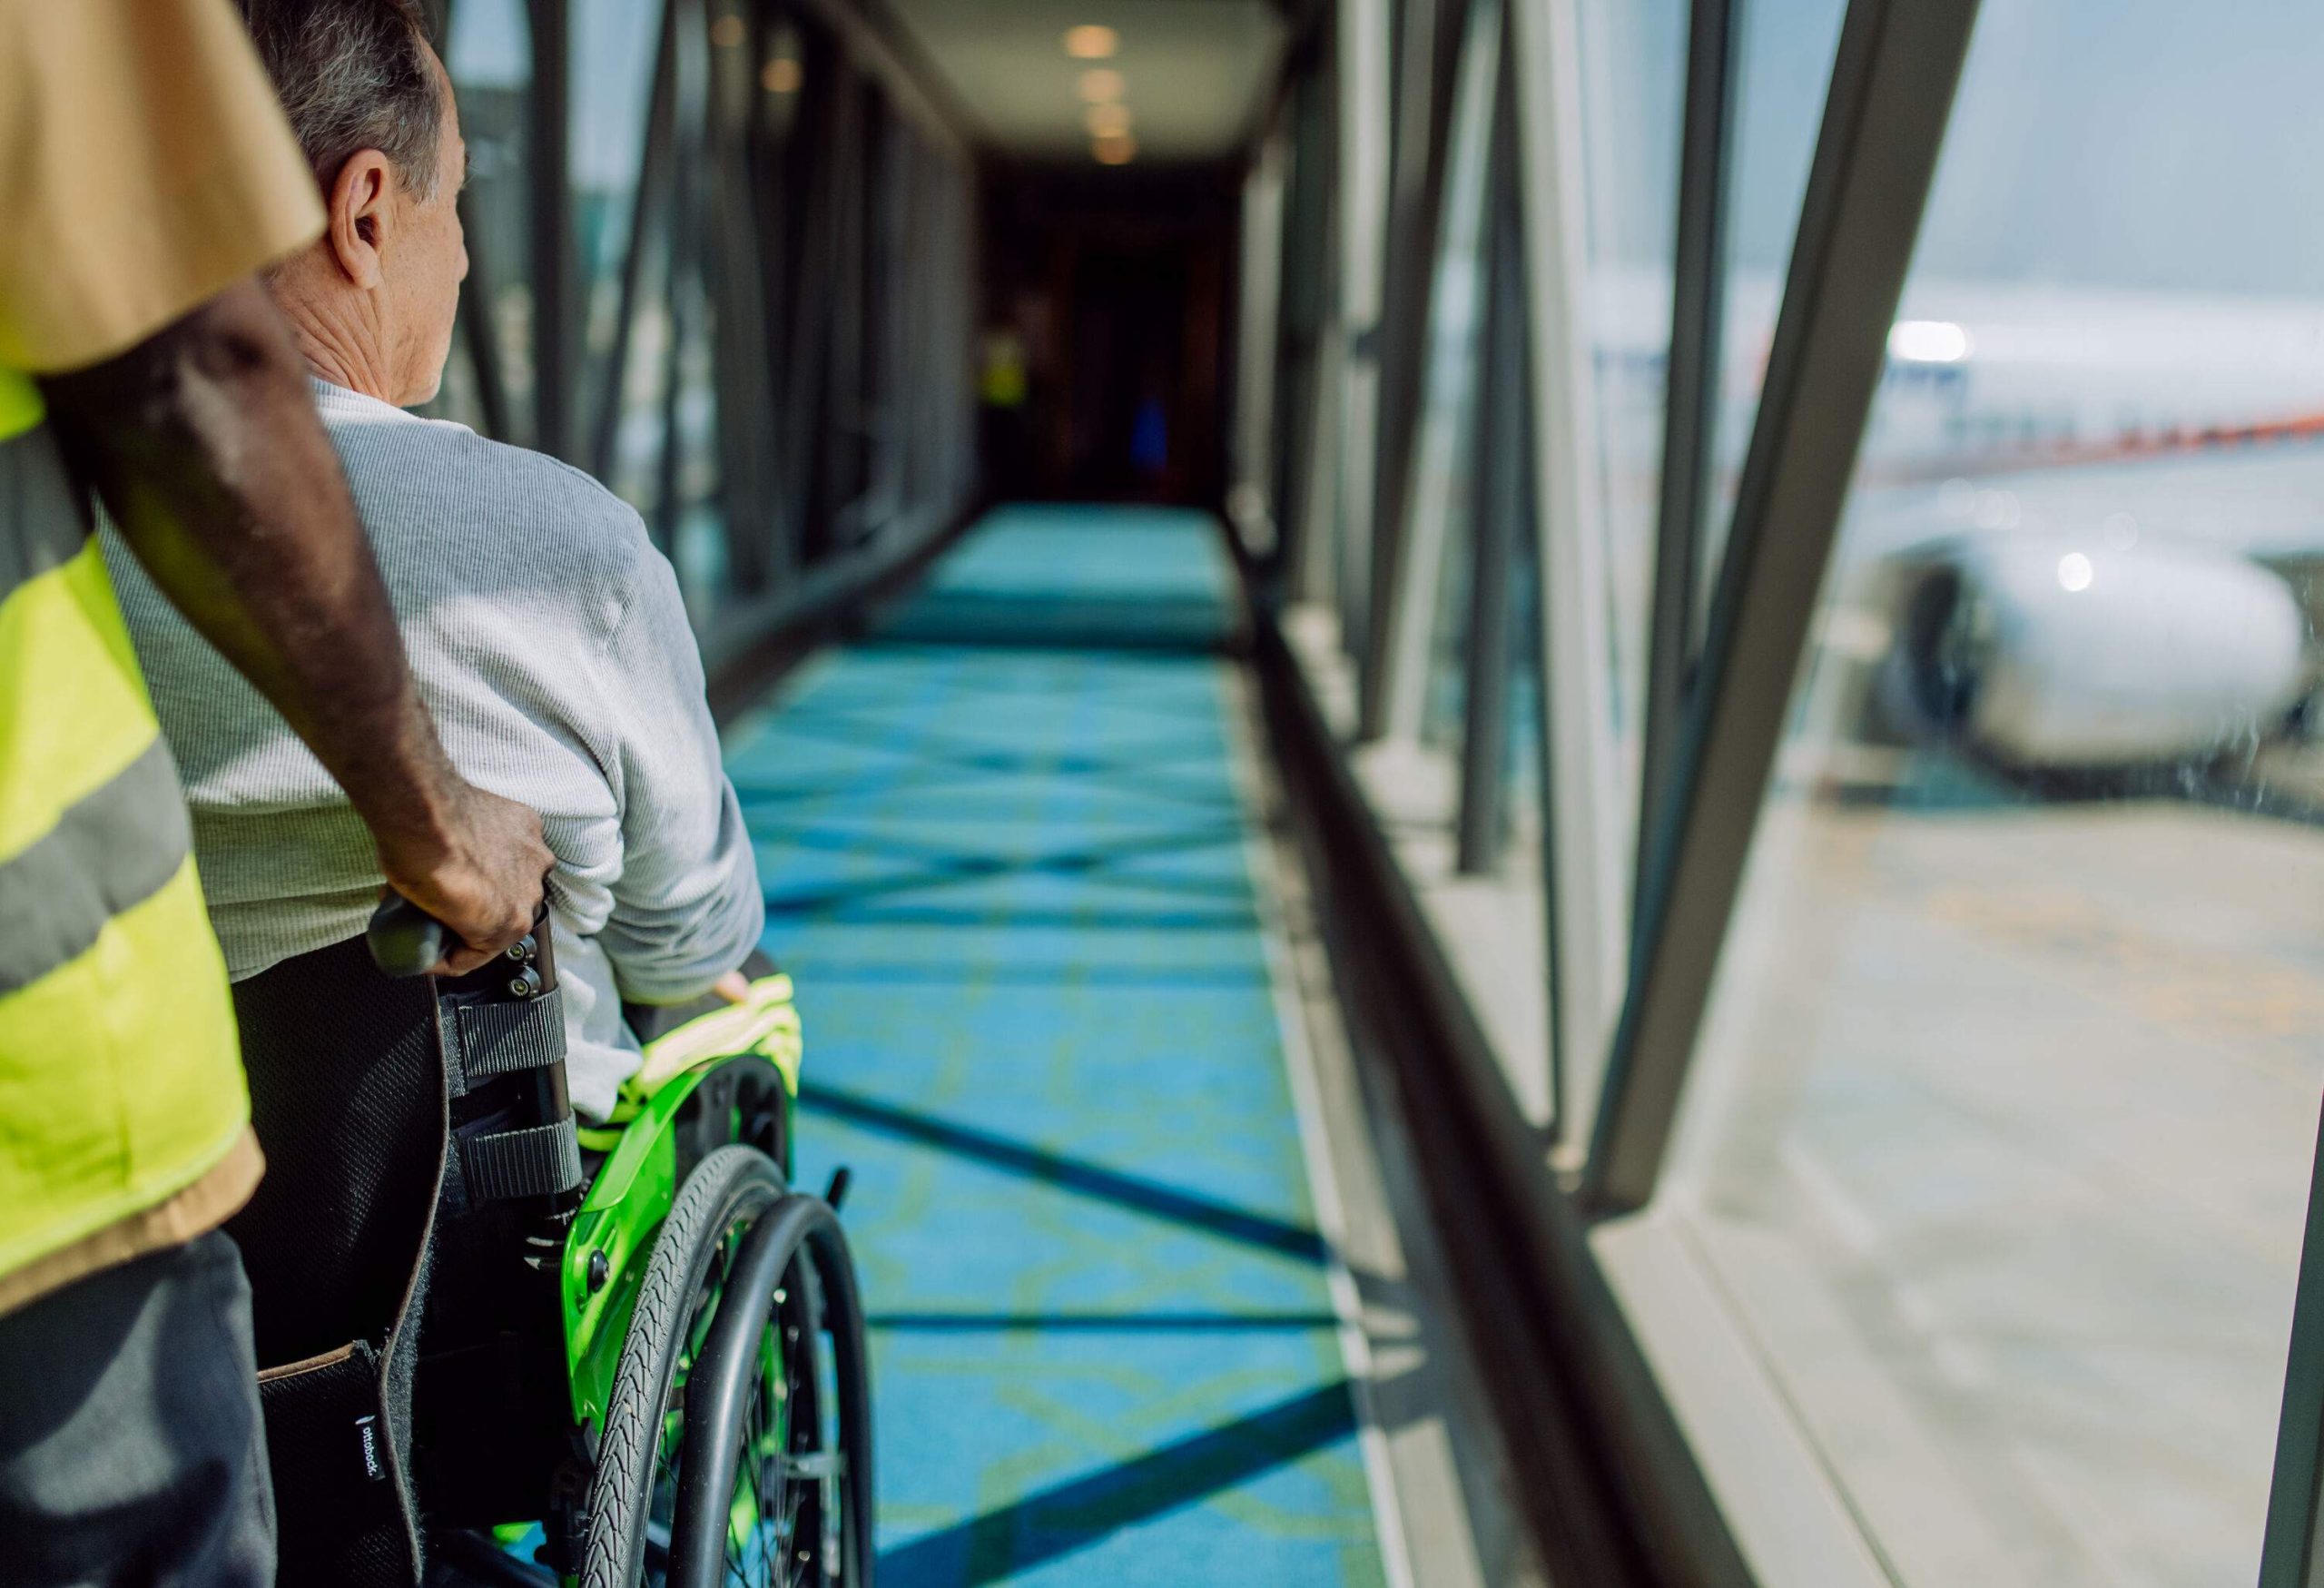 An airport worker pushes a man in a wheelchair inside an airport passenger boarding bridge.